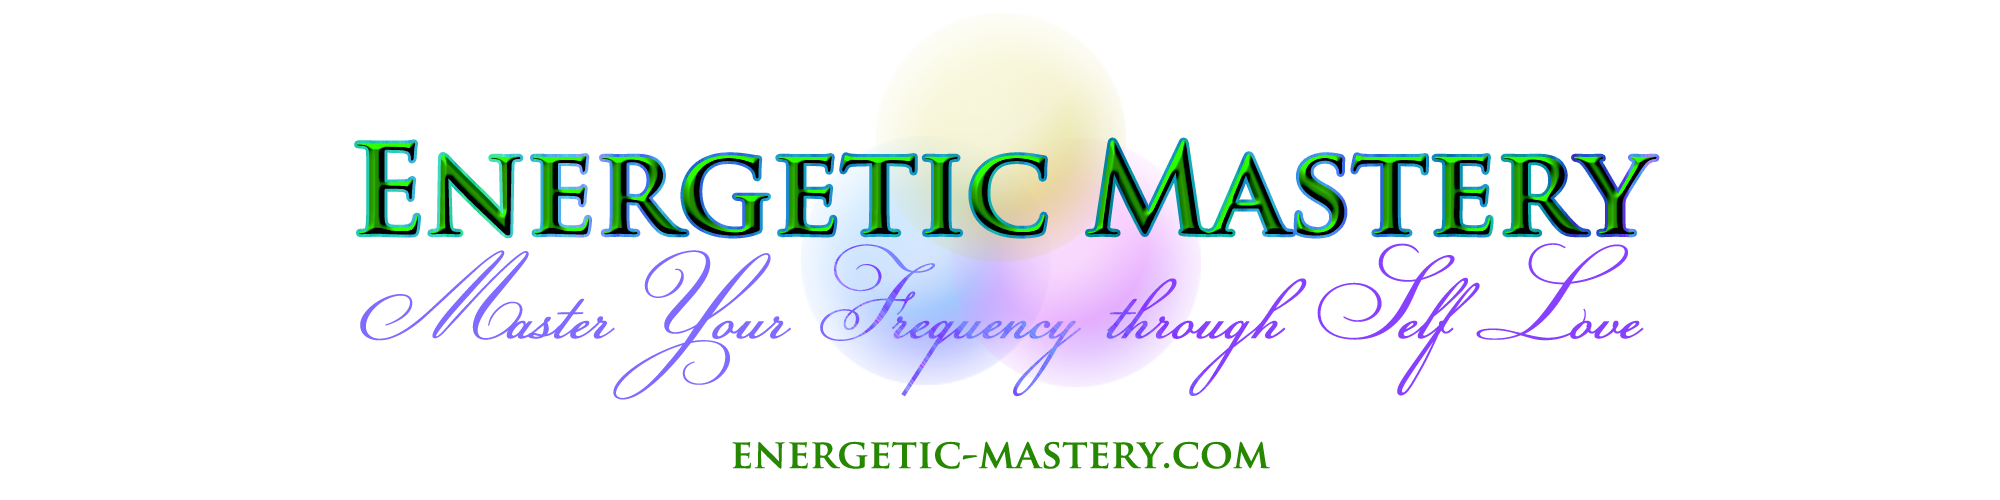 Energetic Mastery